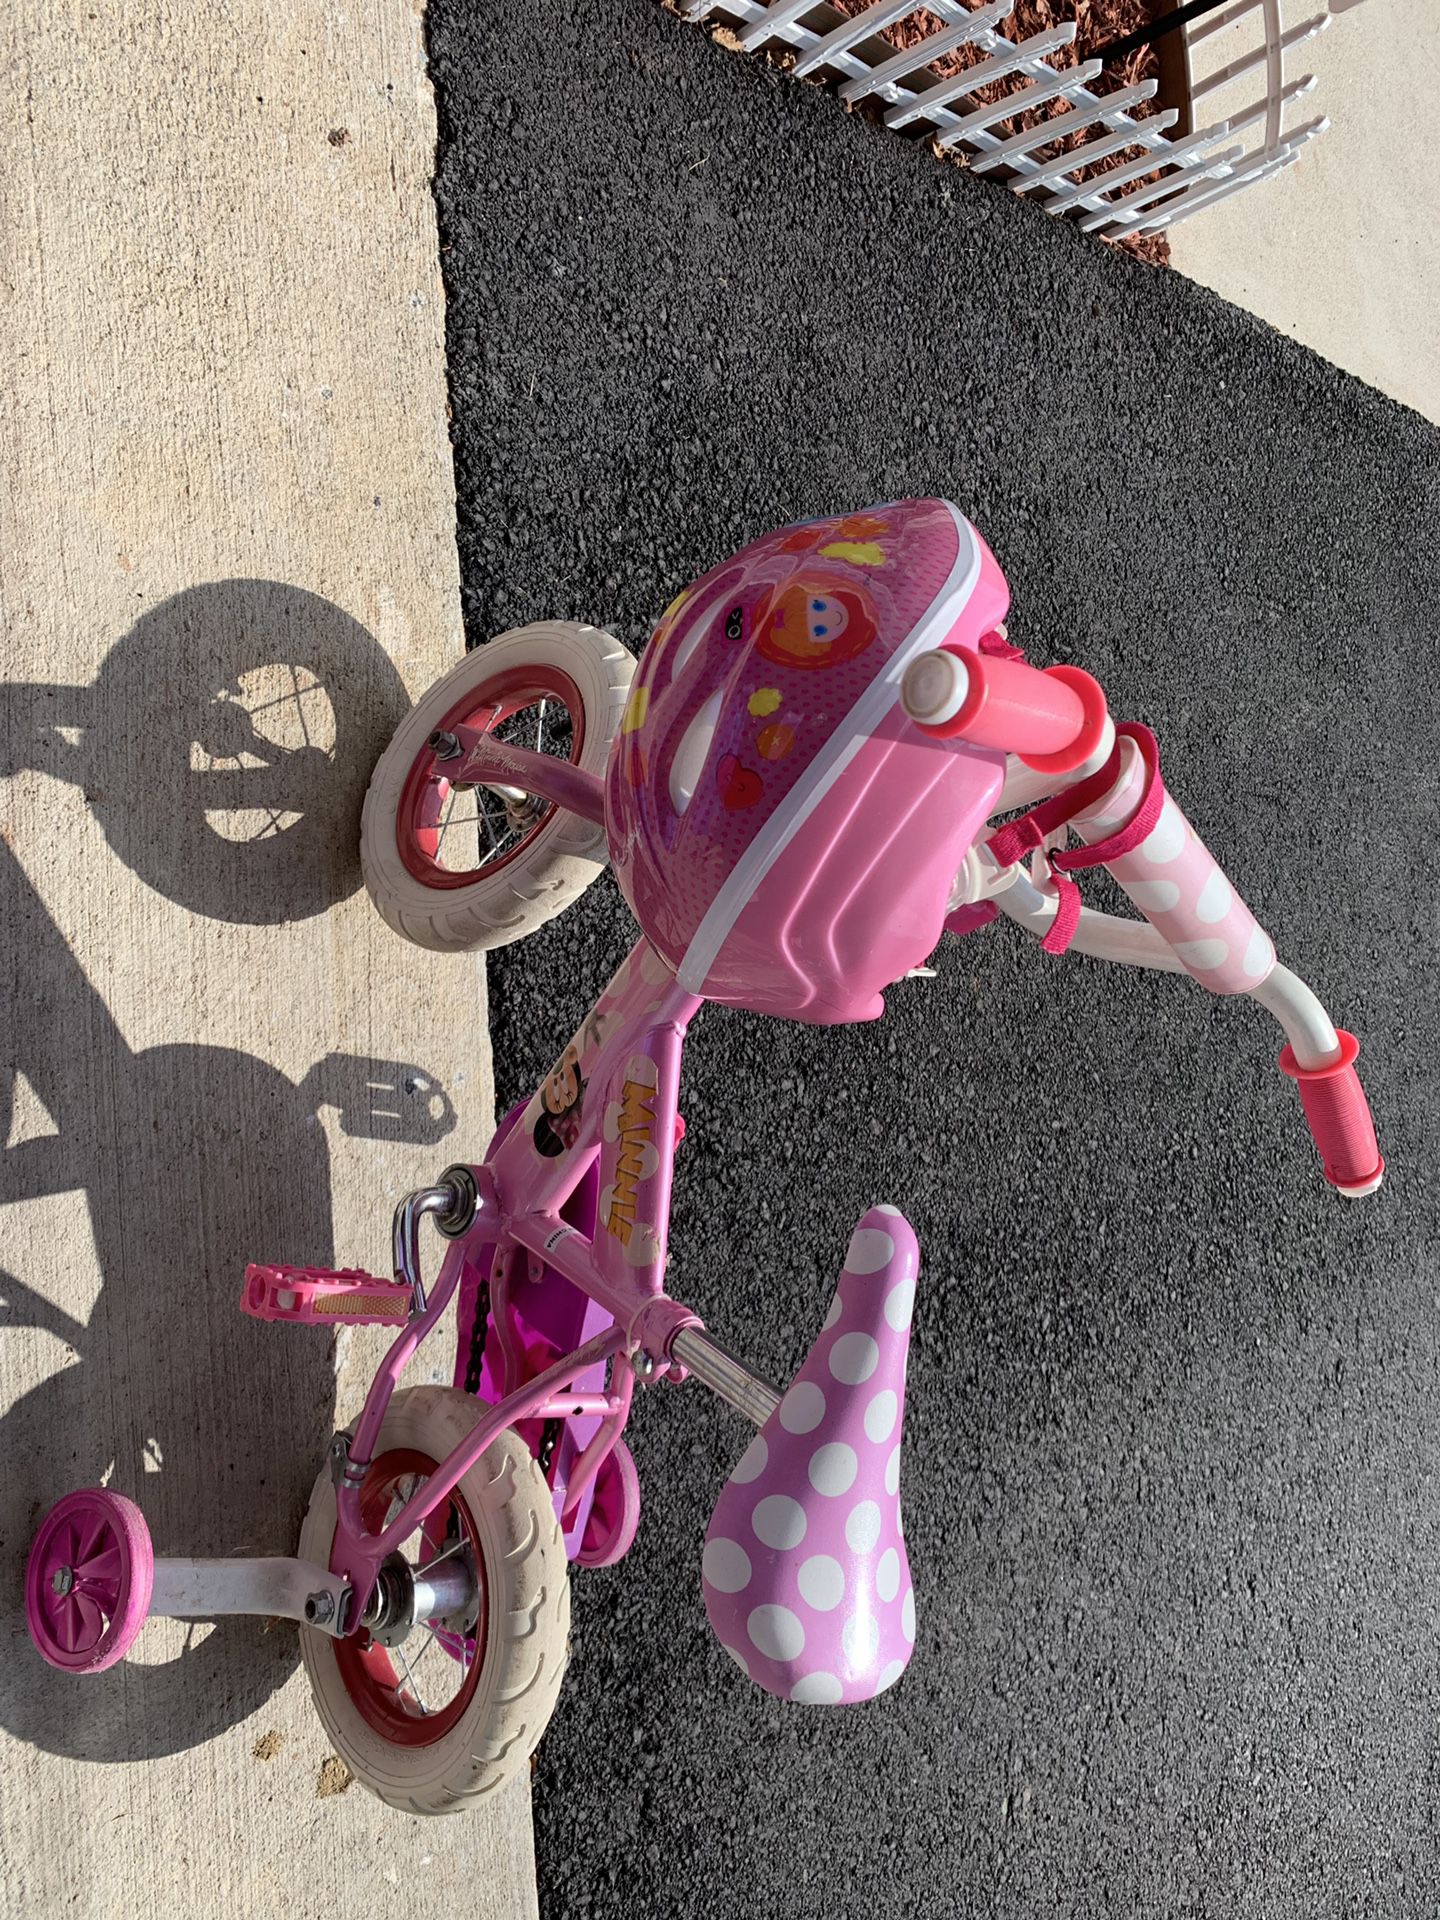 Minnie 10 inch bike and helmet